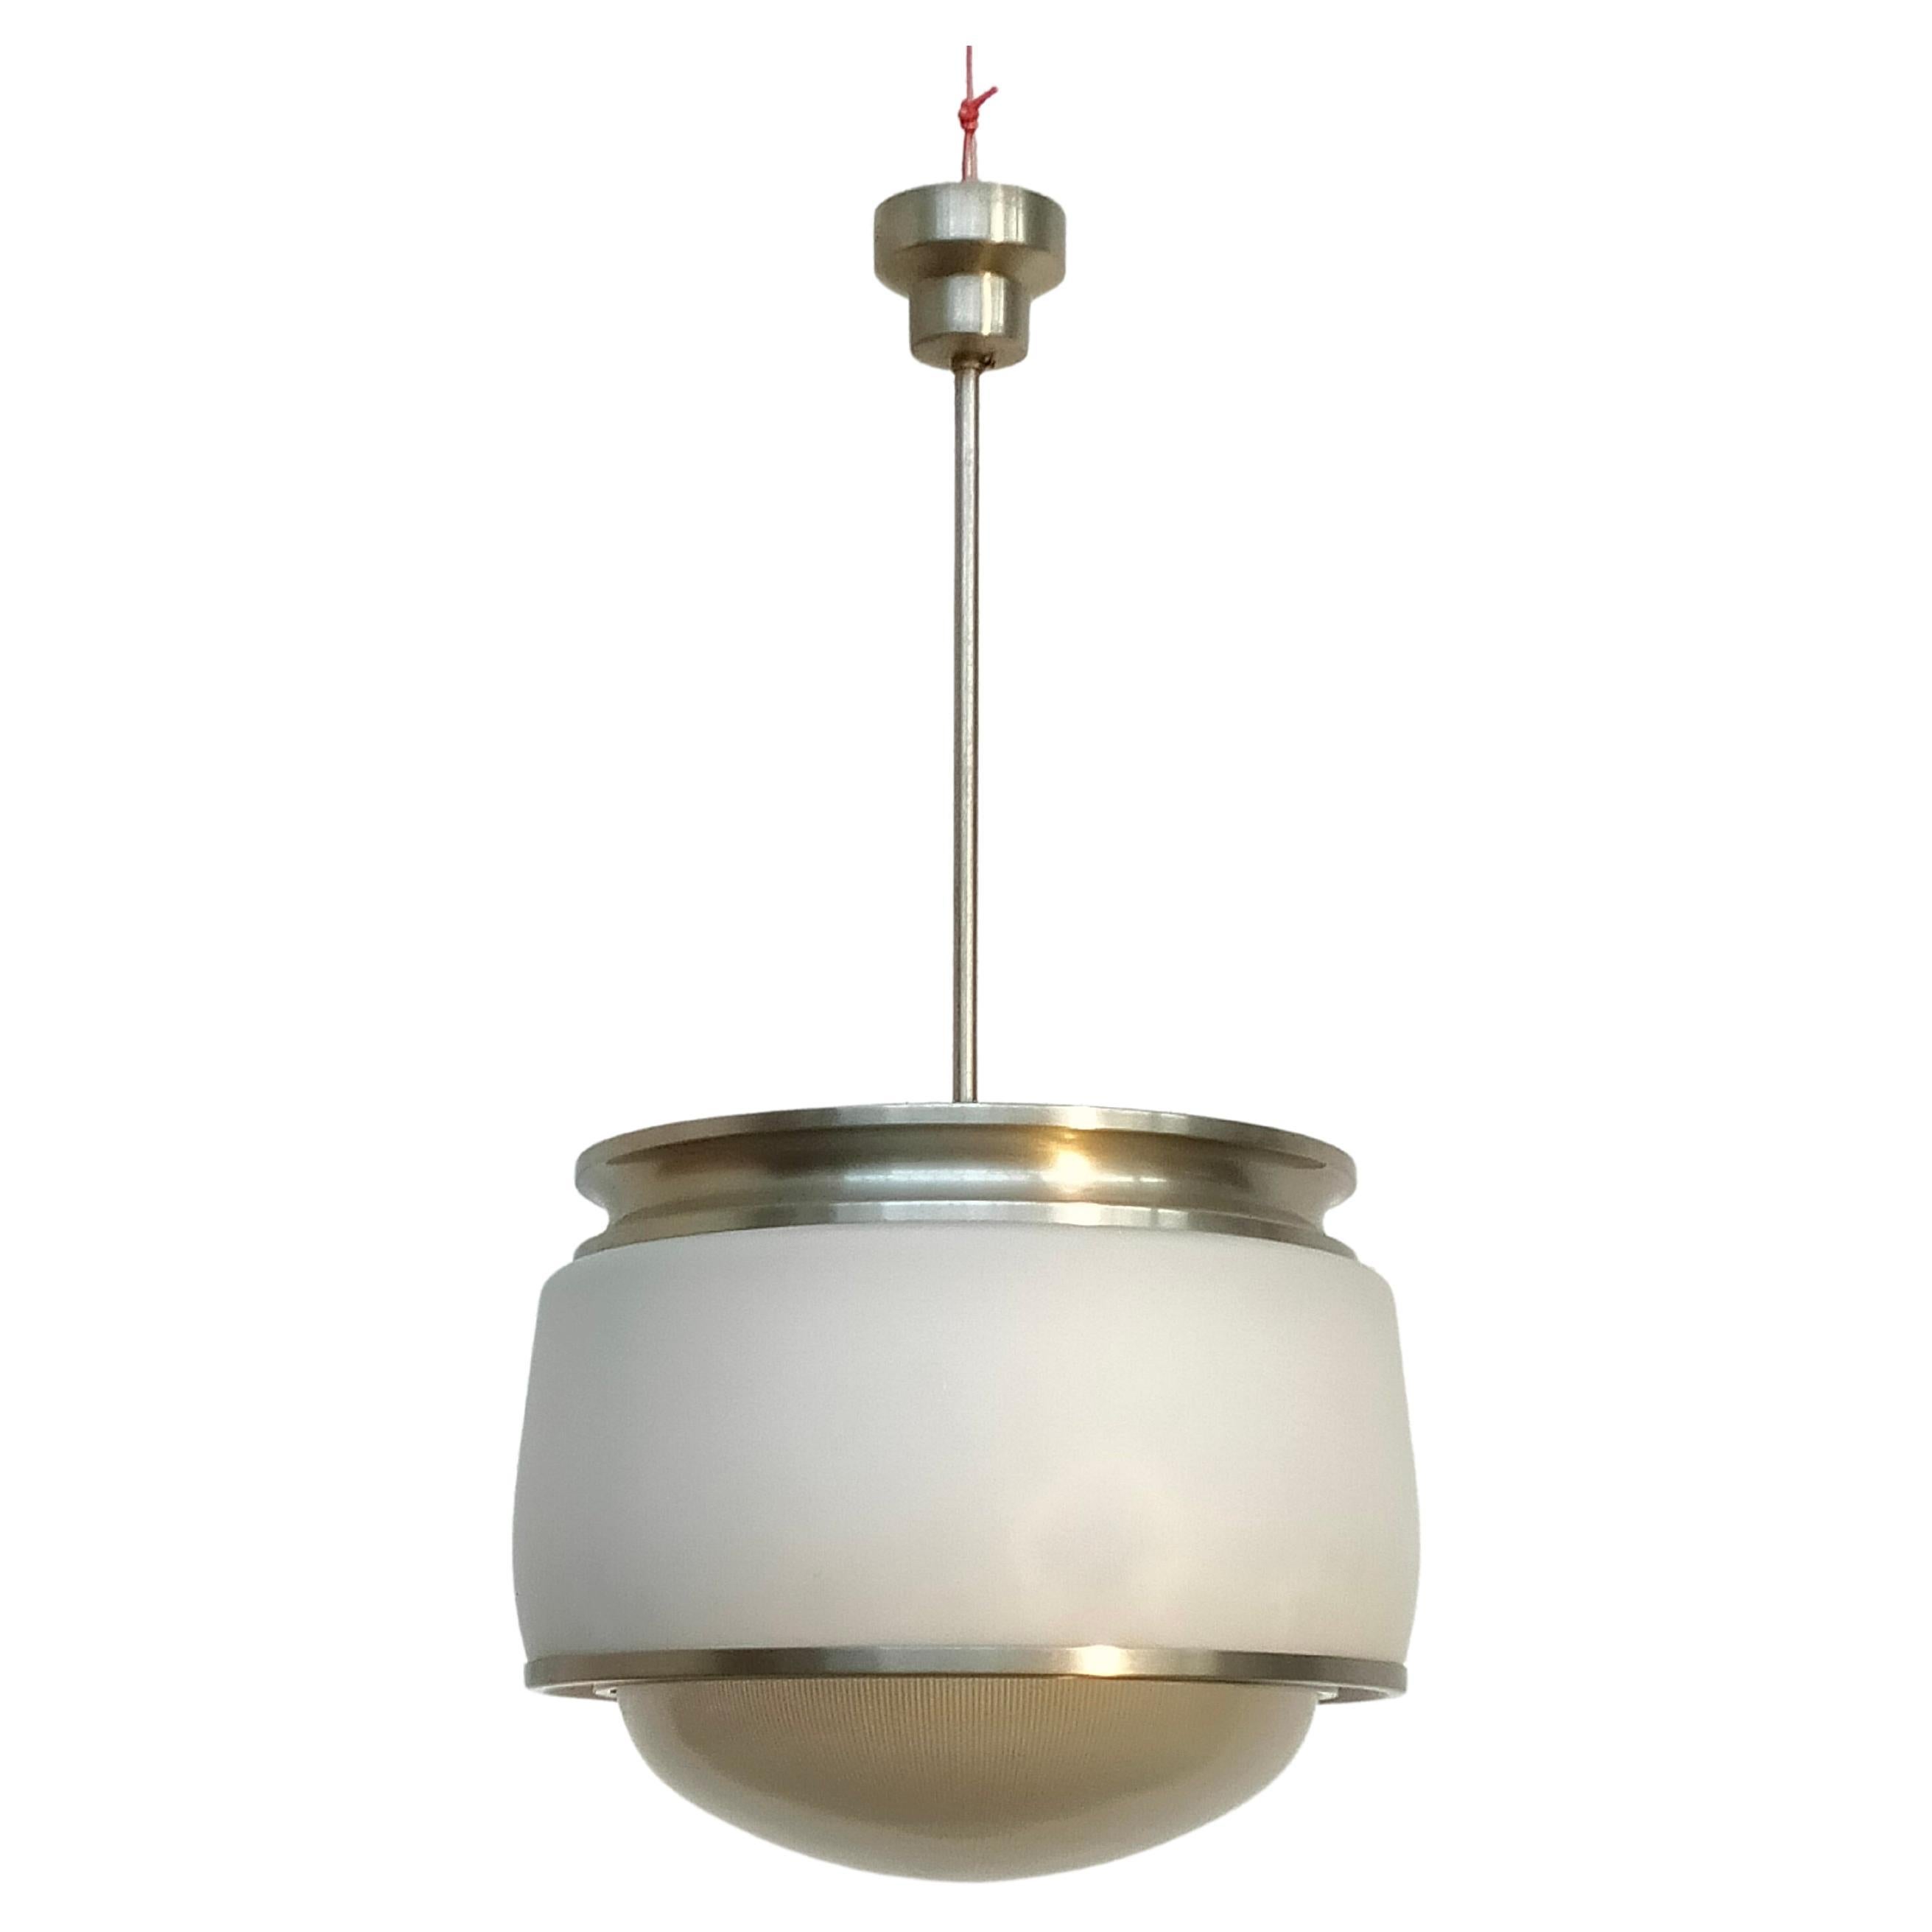 Glass Pendant Lamp “Kappa” Model by Sergio Mazza for Artemide 60s